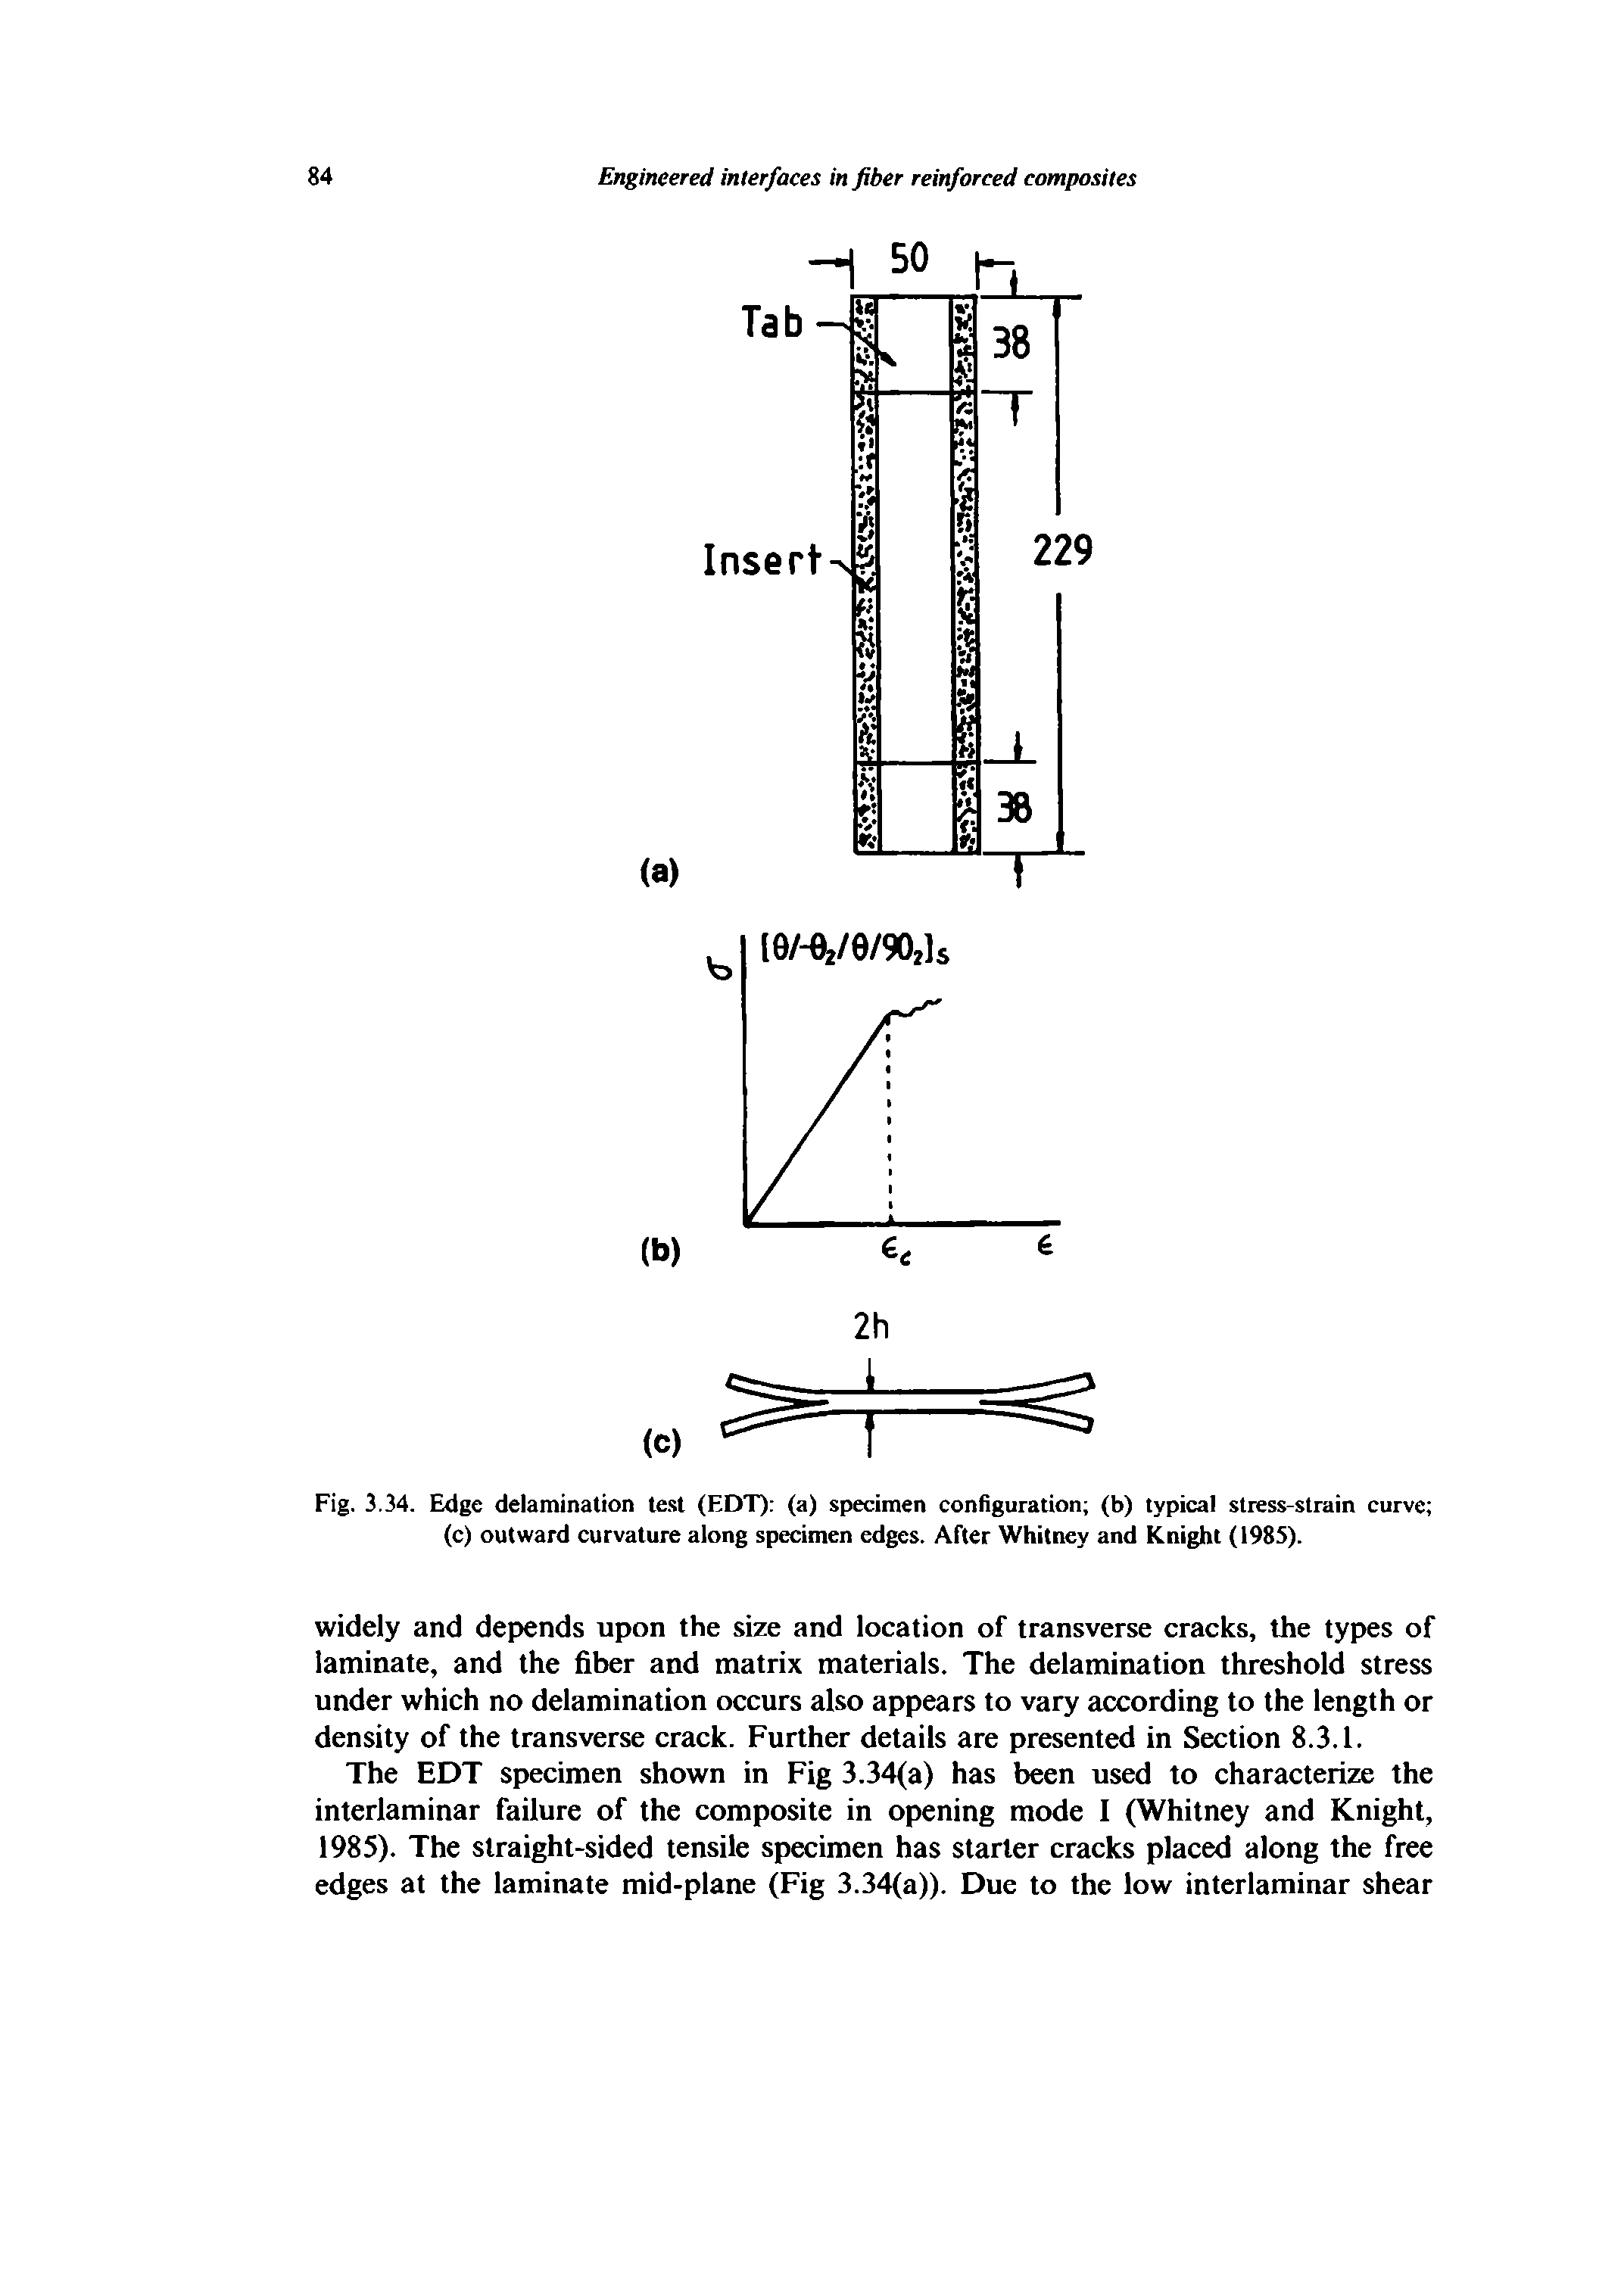 Fig. 3,34. Edge delamination test (EDT) (a) specimen configuration (b) typical stress-strain curve (c) outward curvature along specimen edges. After Whitney and Knight (1985).